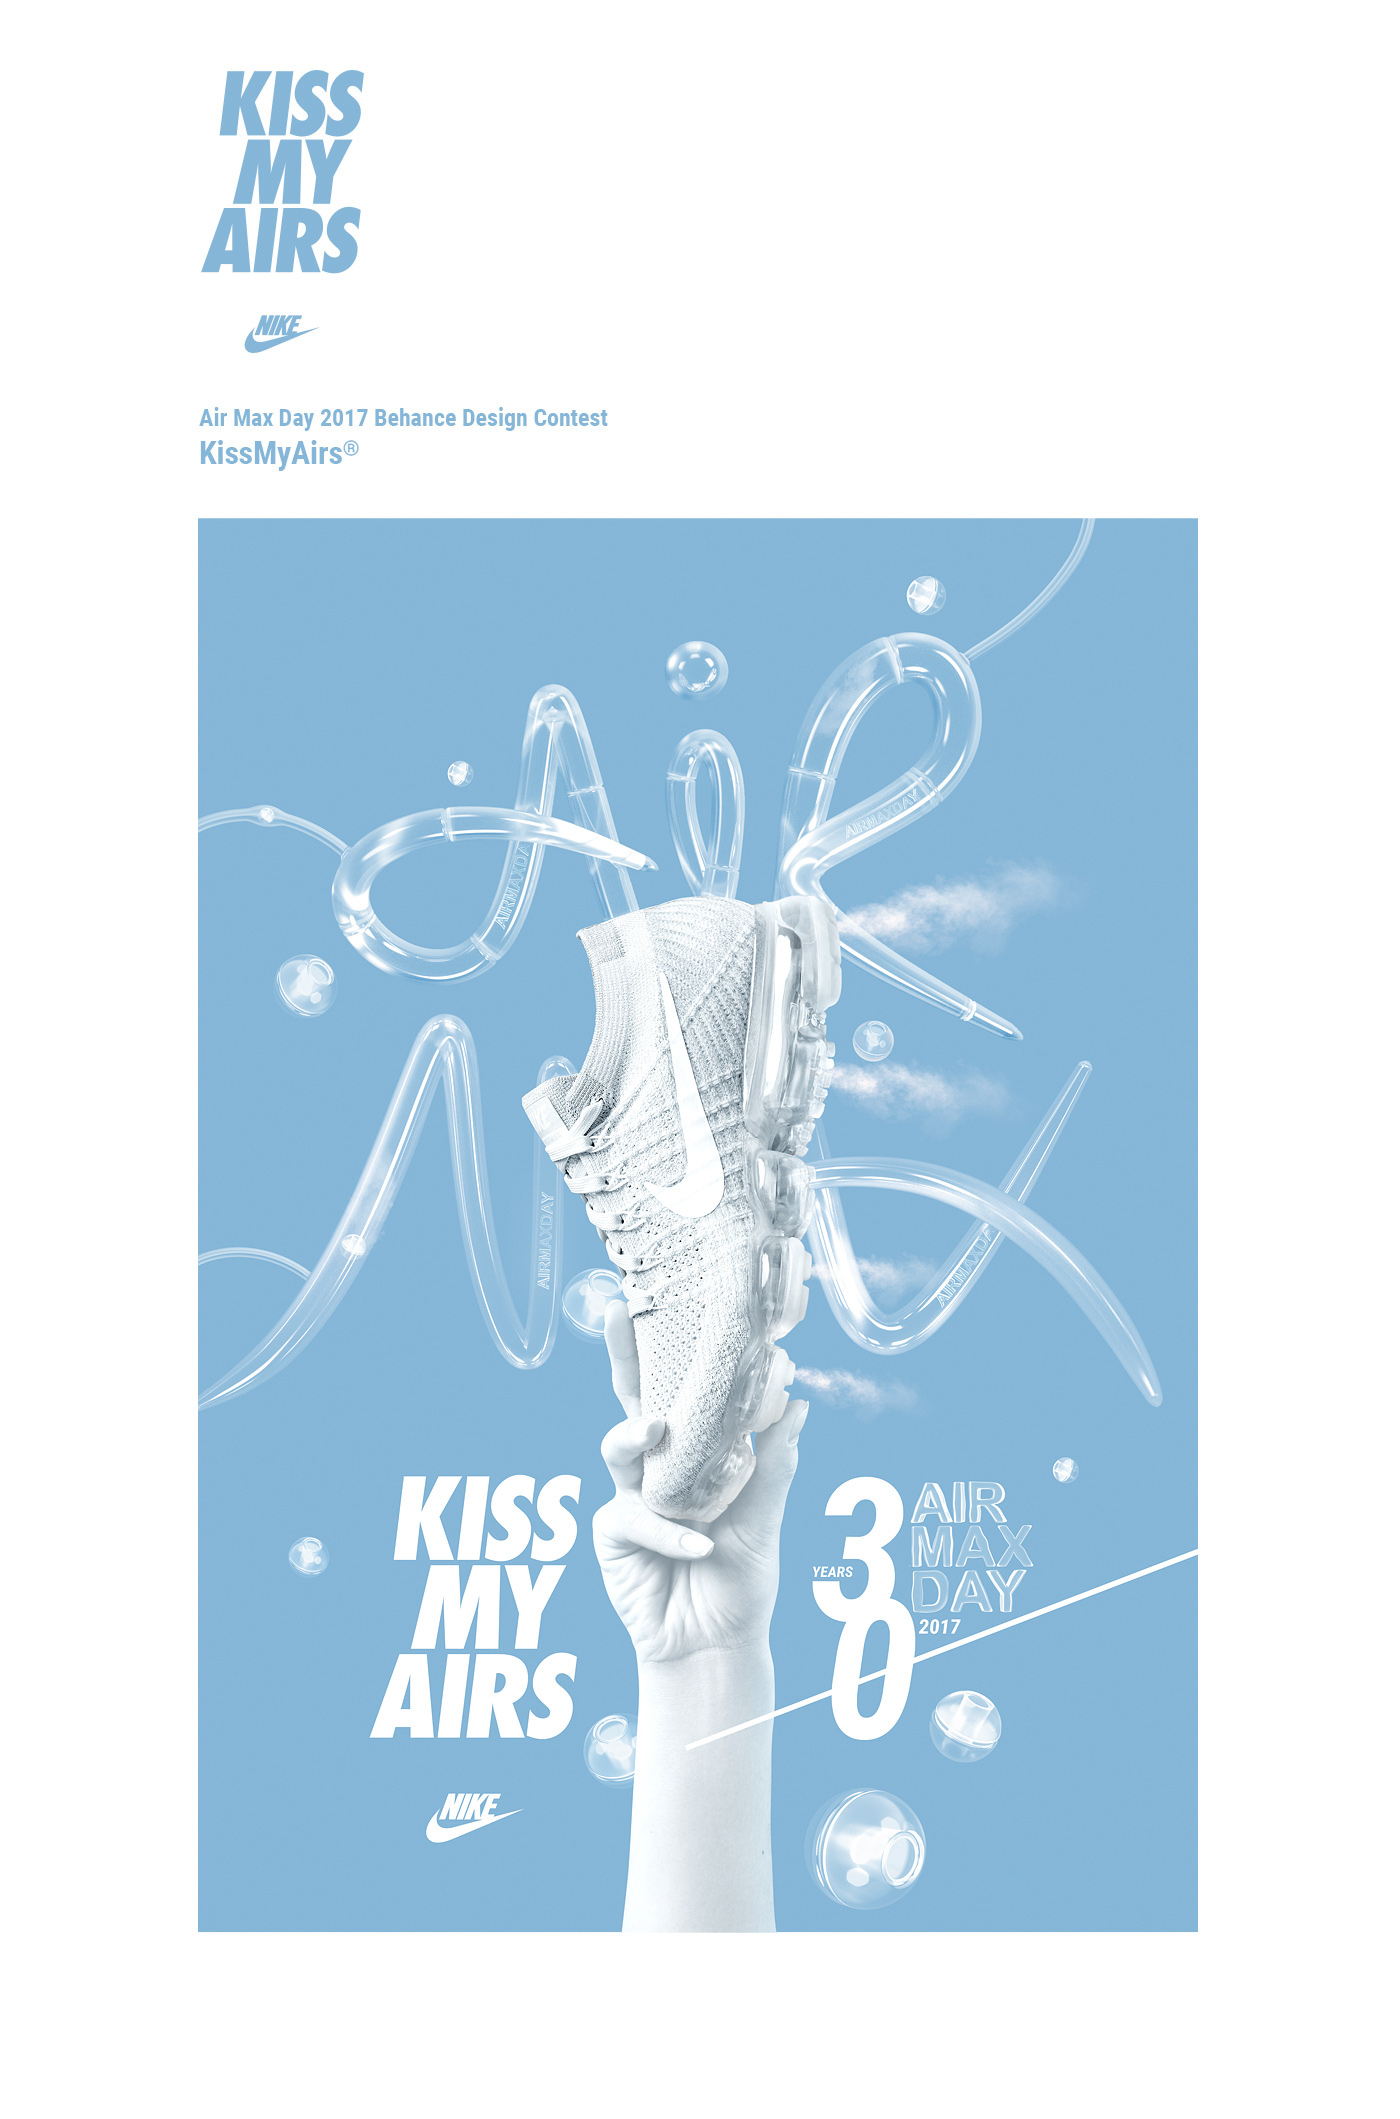 Nike airmax poster Kiss My Airs vapormax air anniversary contest